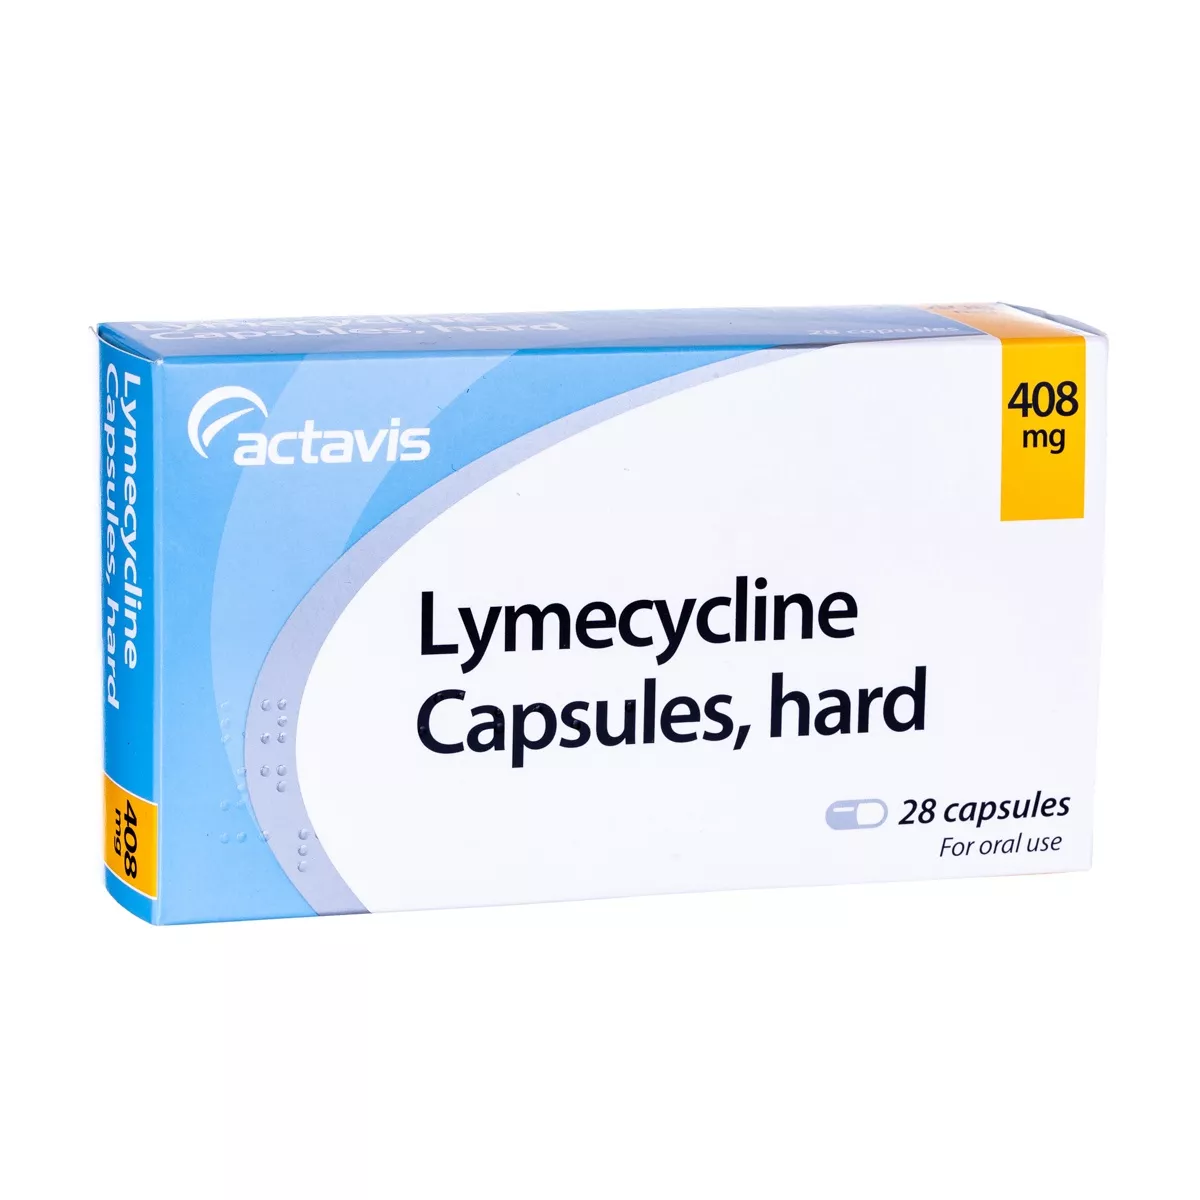 lymecycline capsules